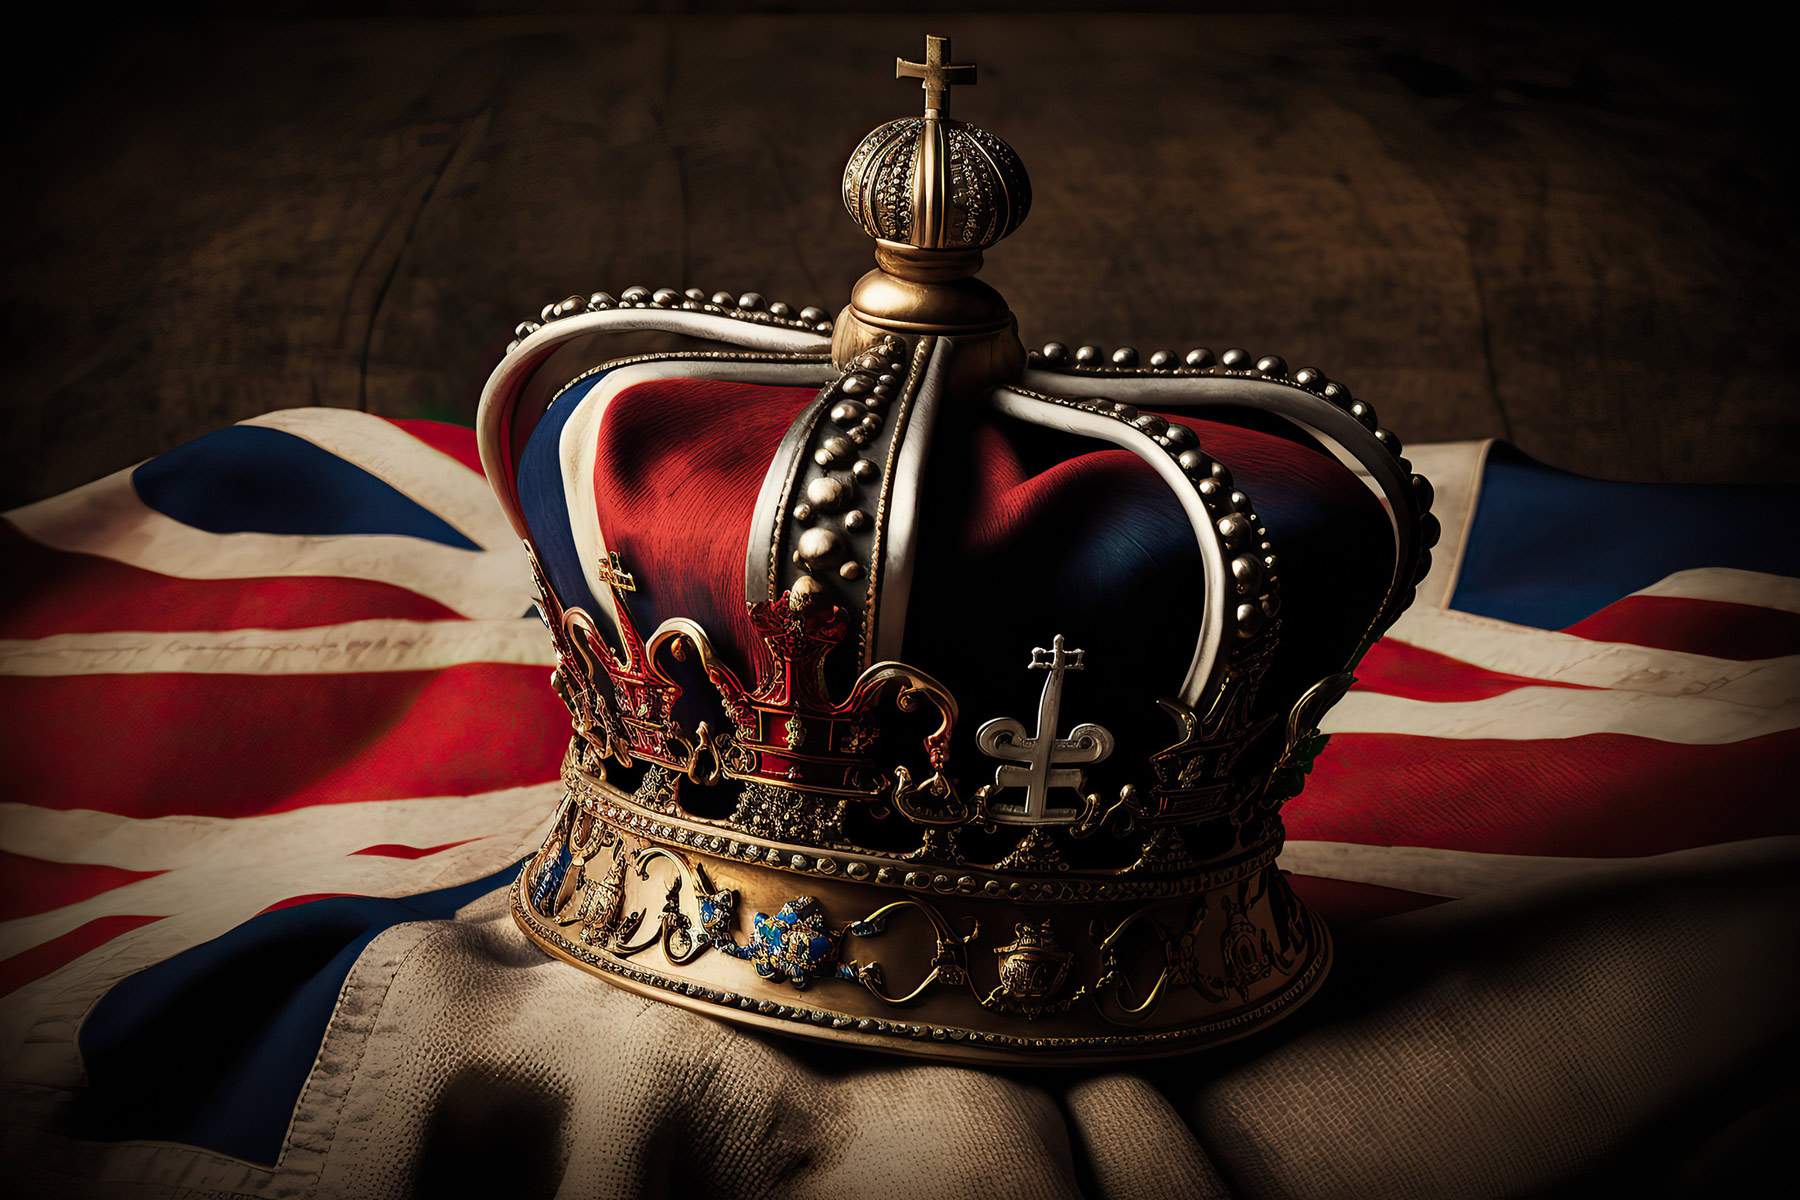 Celebrating the Coronation of HM King Charles III